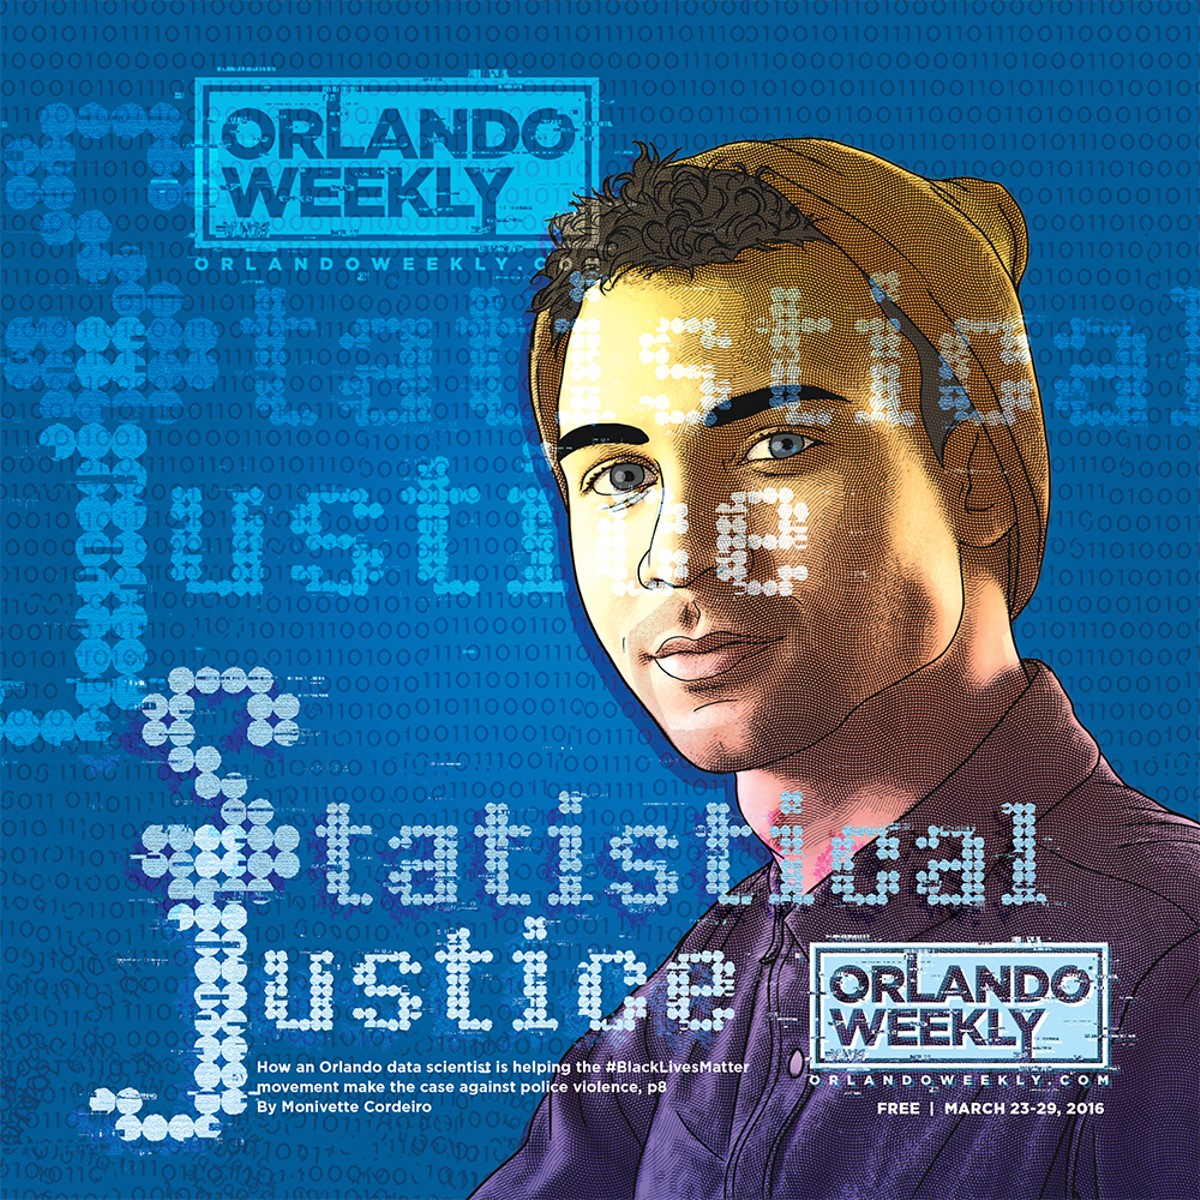 How an Orlando data scientist is helping #BlackLivesMatter make the case against police violence